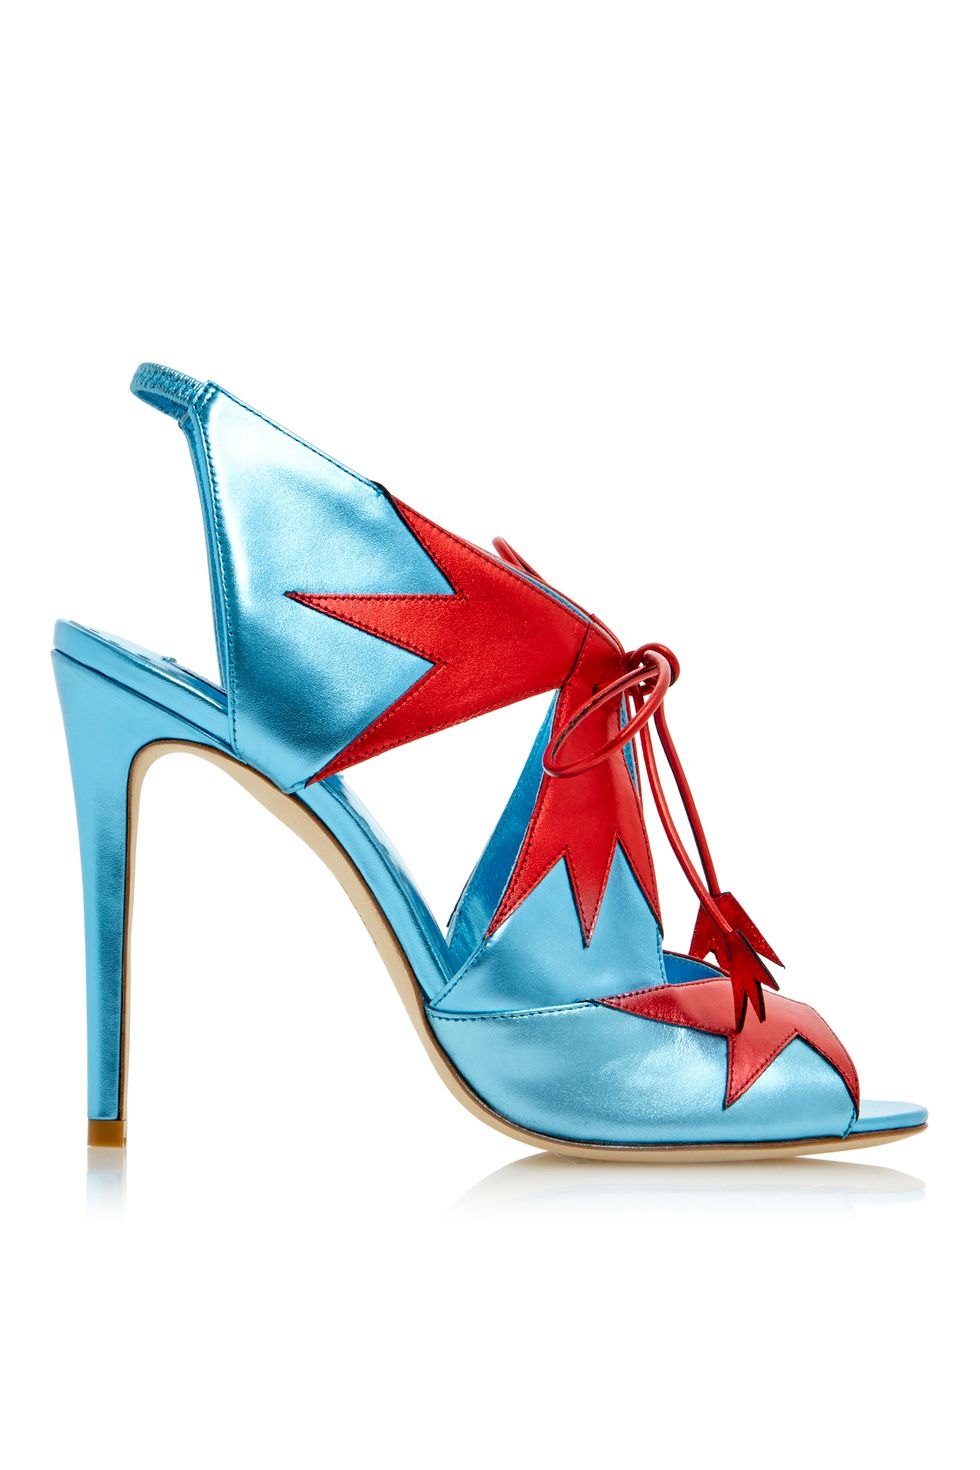 Footwear, High heels, Basic pump, Turquoise, Blue, Red, Slingback, Shoe, Bridal shoe, Sandal, 